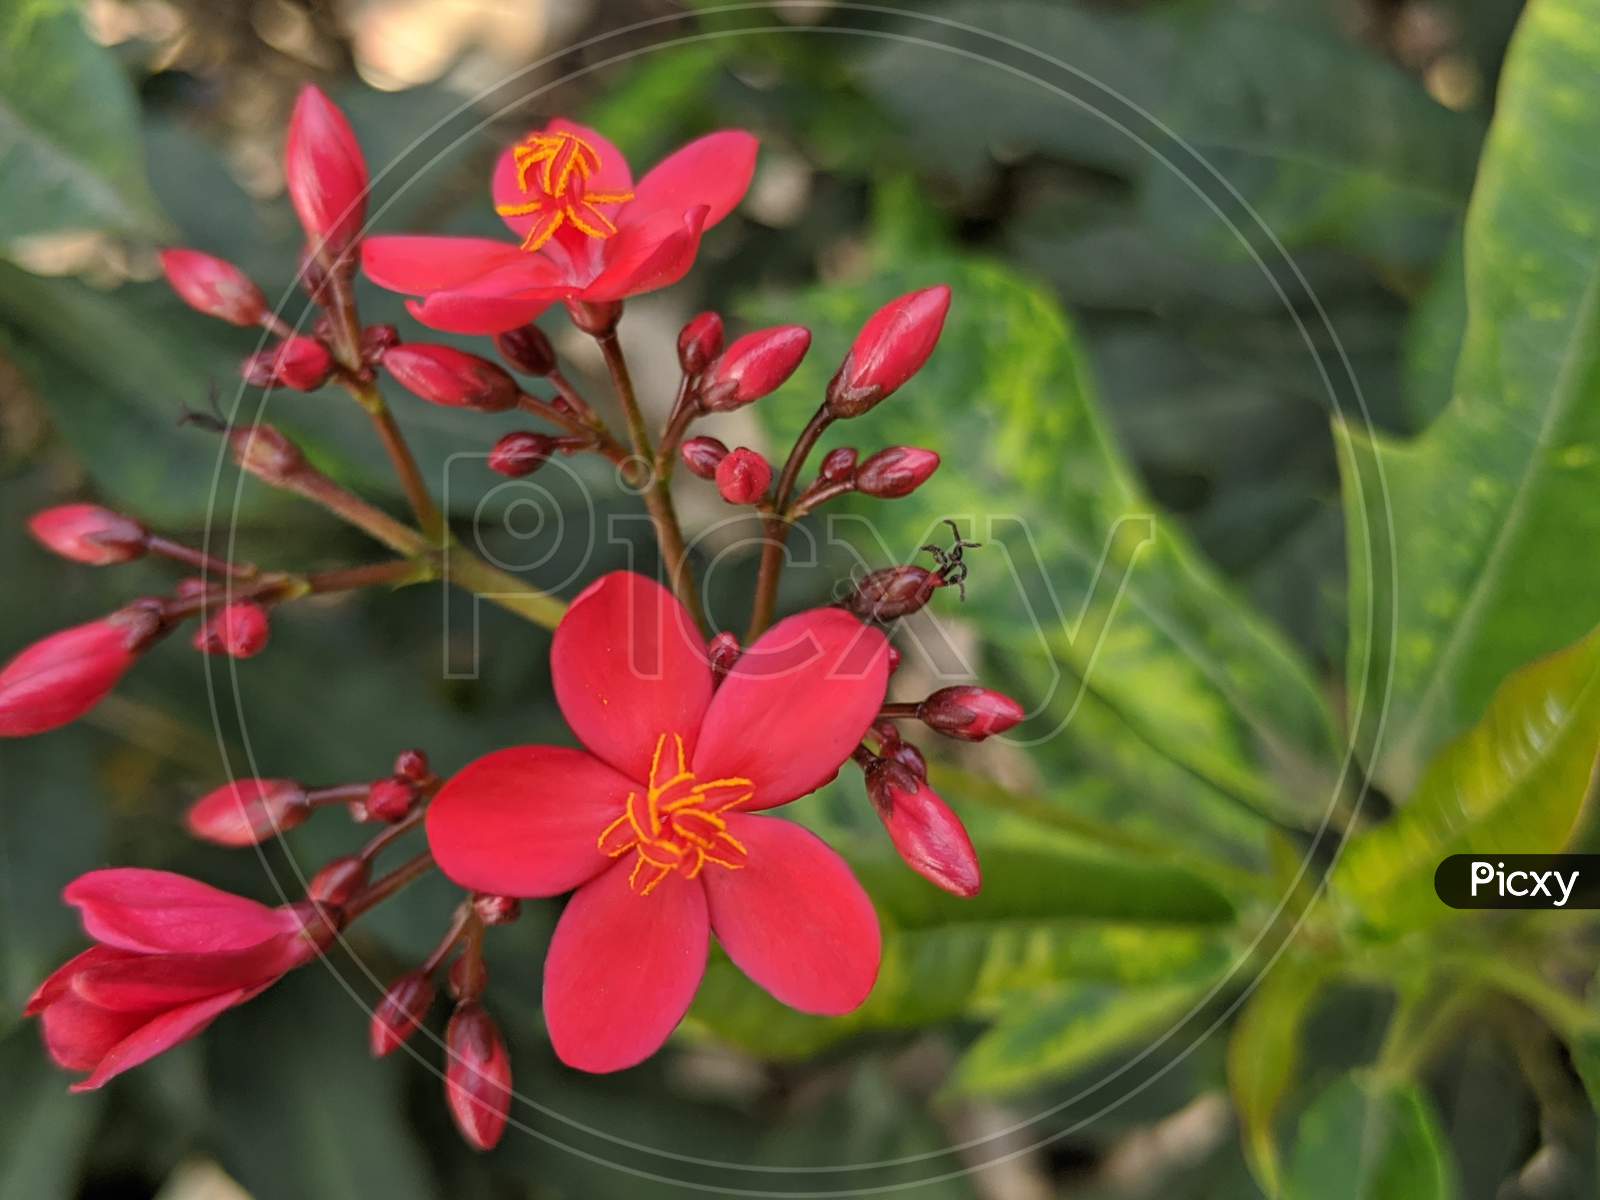 Five petal red flower in garden.